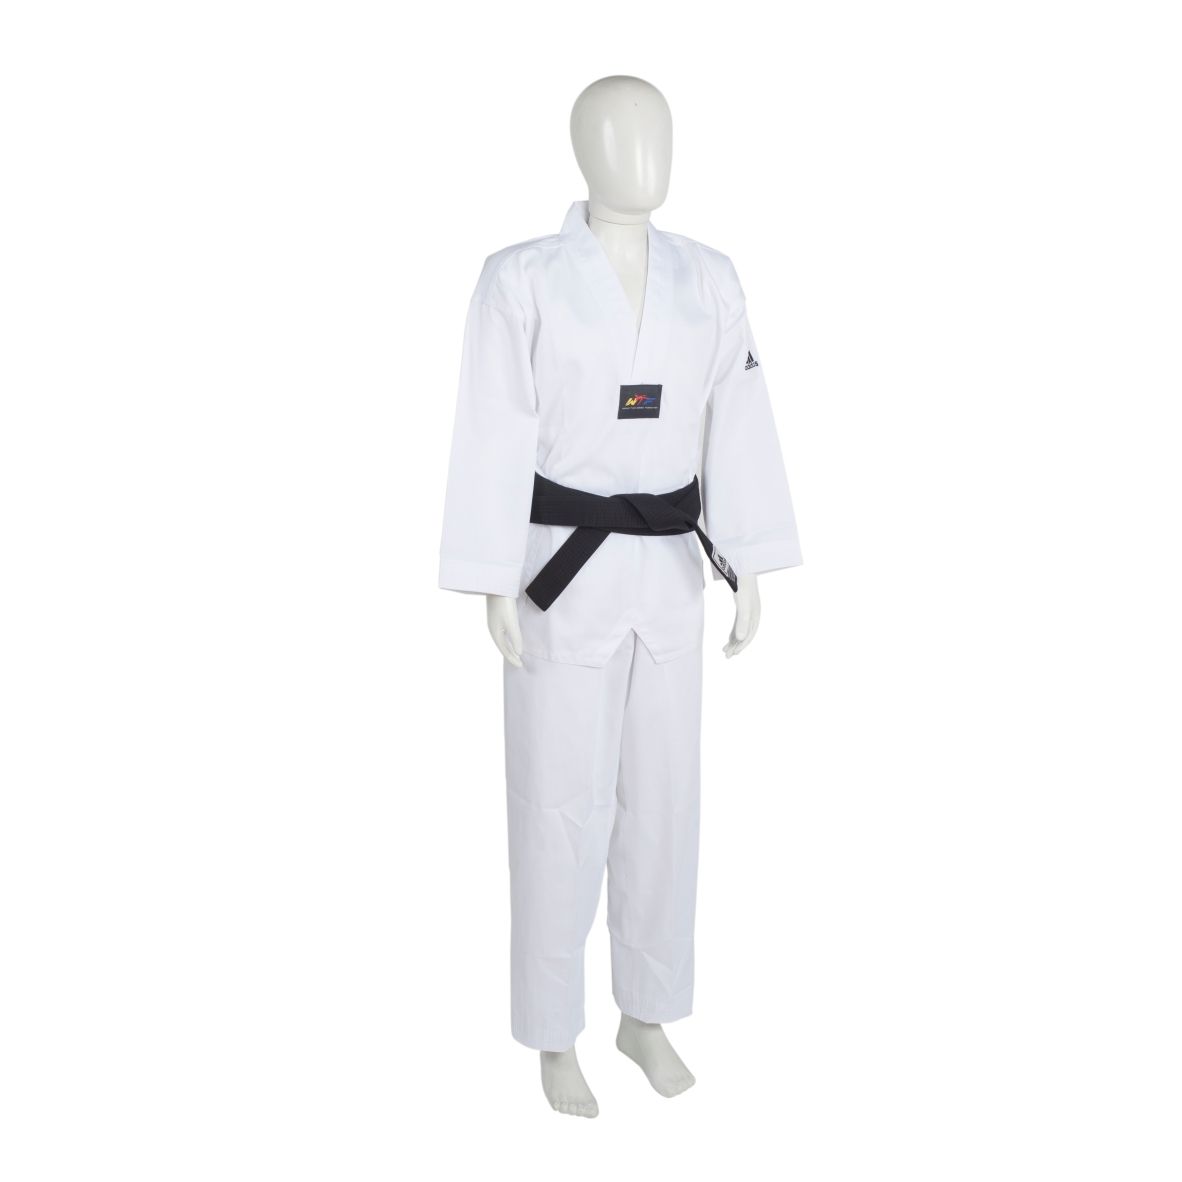 Dobok Taekwondo Infantil adidas Adistart com selo WTF - gola branca